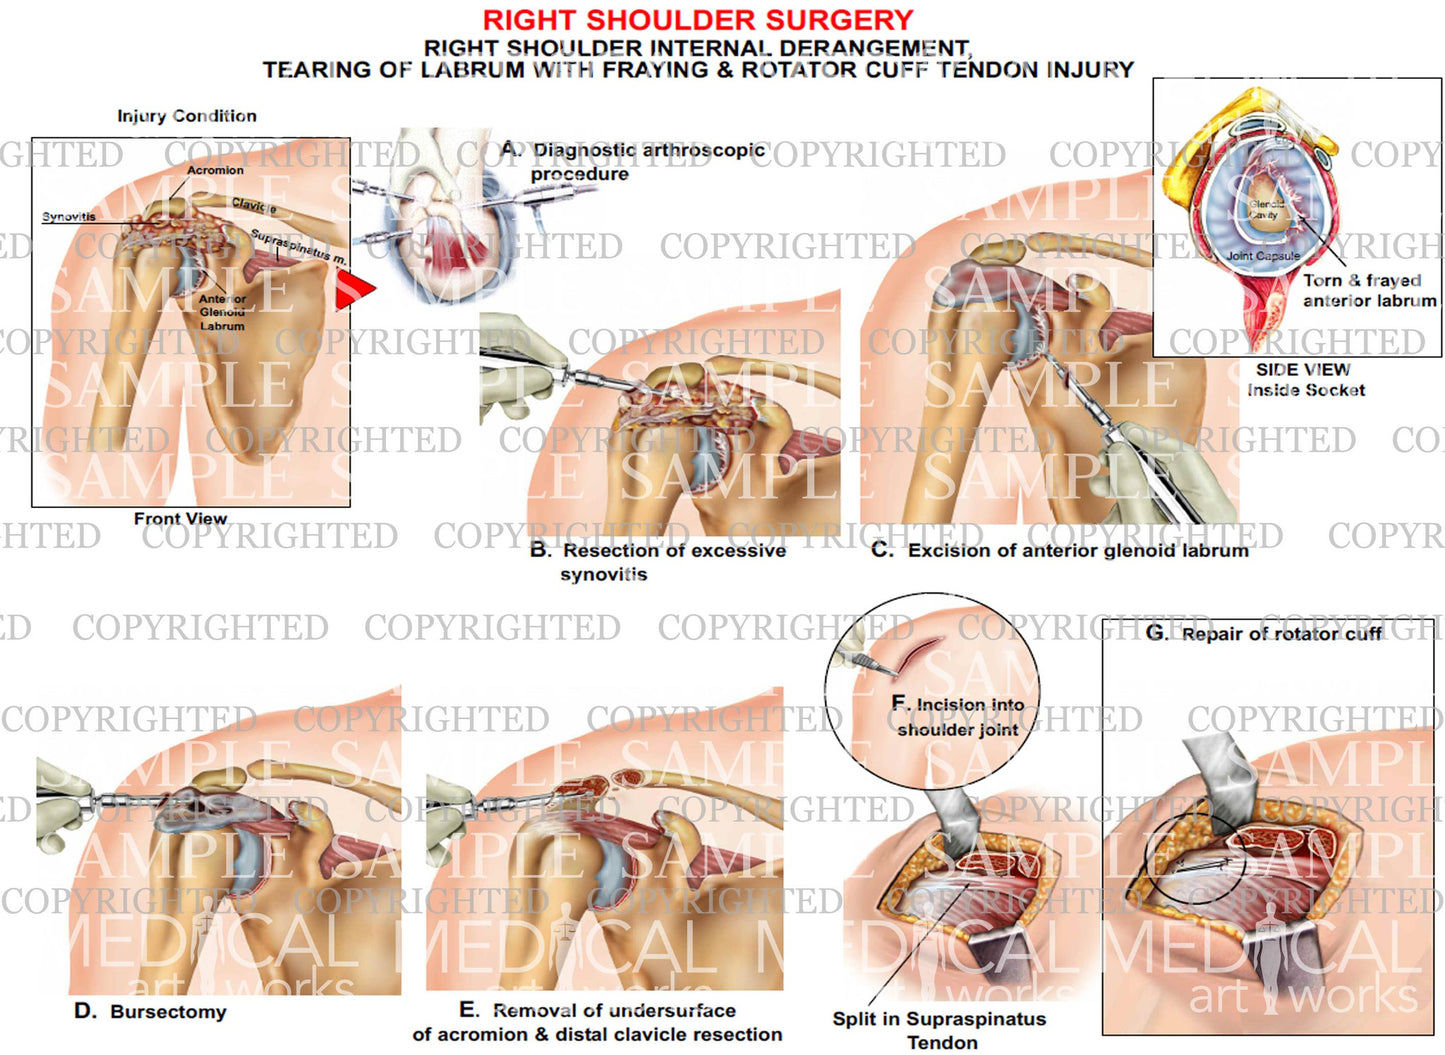 Right shoulder internal derangement - Arthroscopic repair